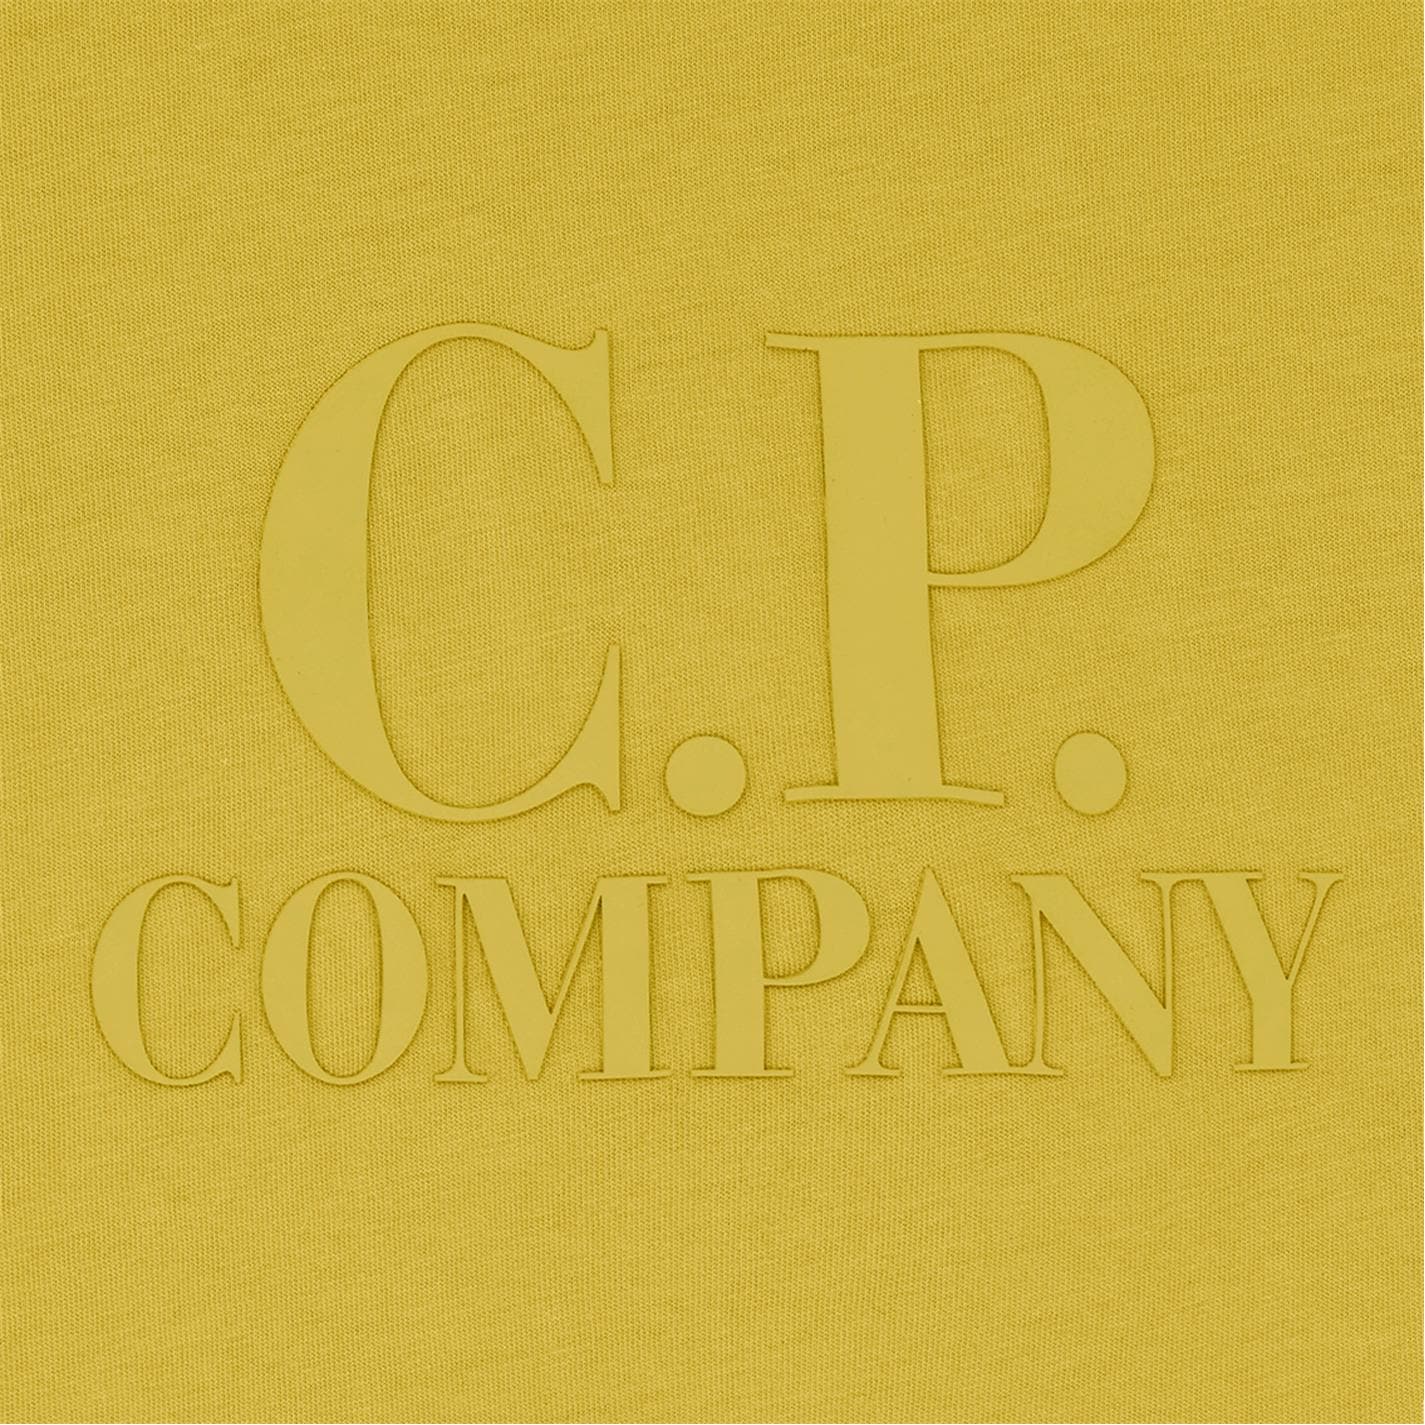 CP Company Logo T-Shirt - DANYOUNGUK